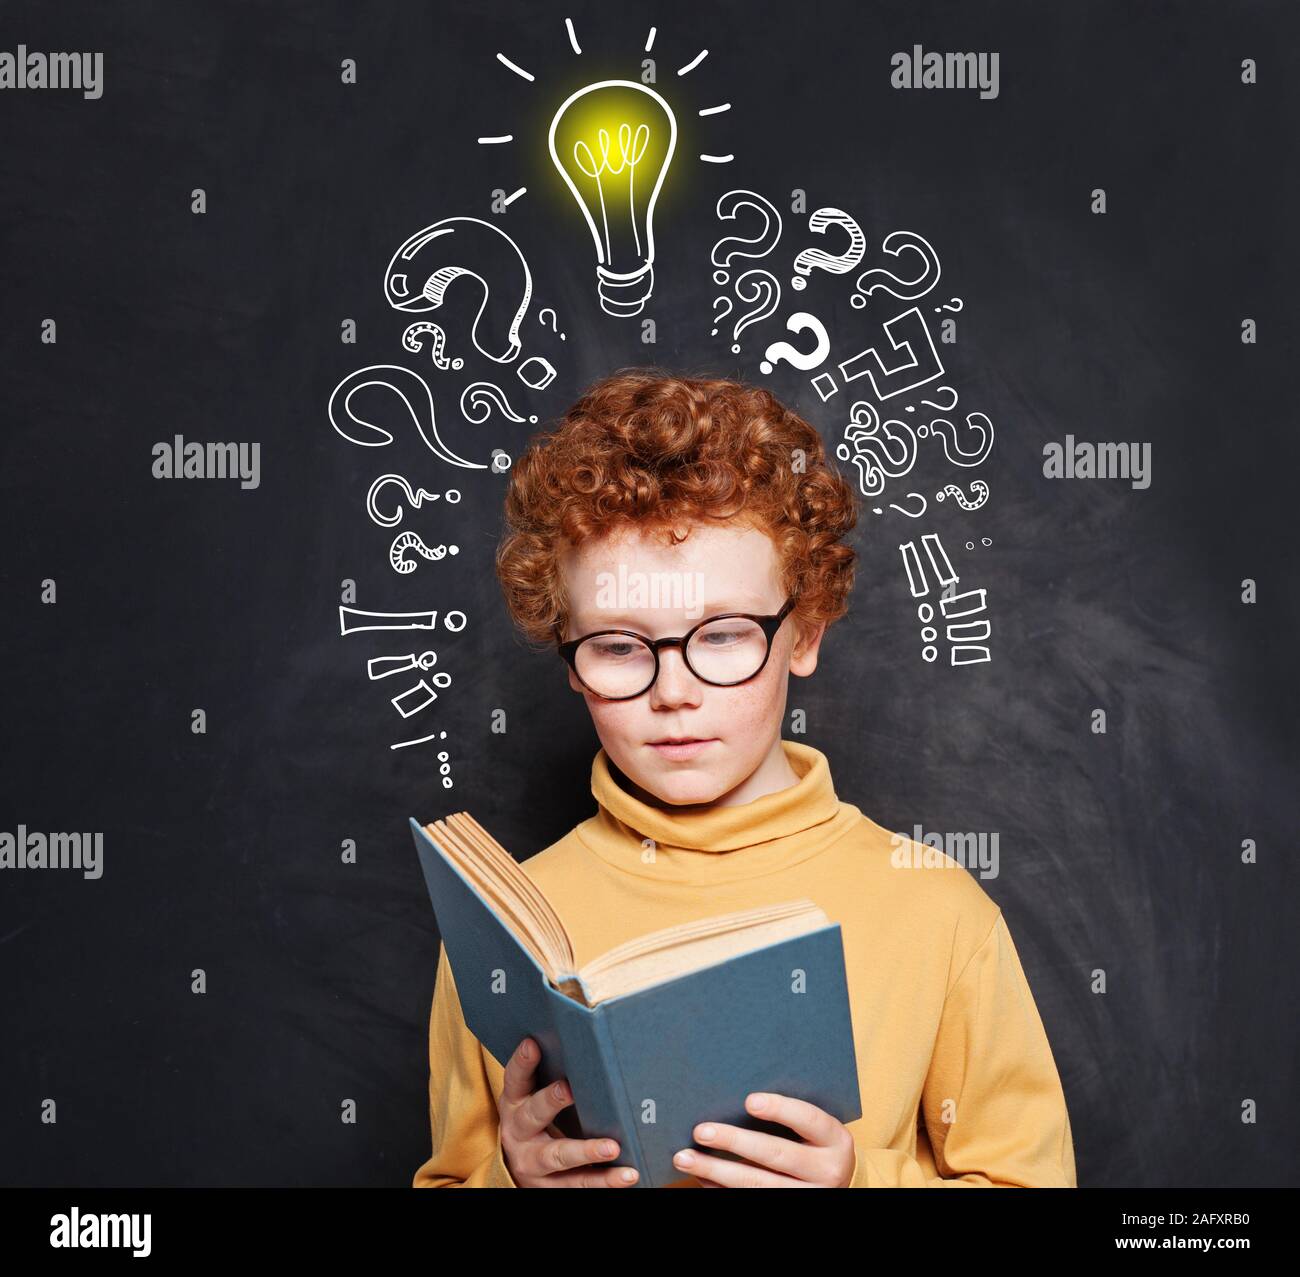 Child reading on blackboard background with lightbulb Stock Photo